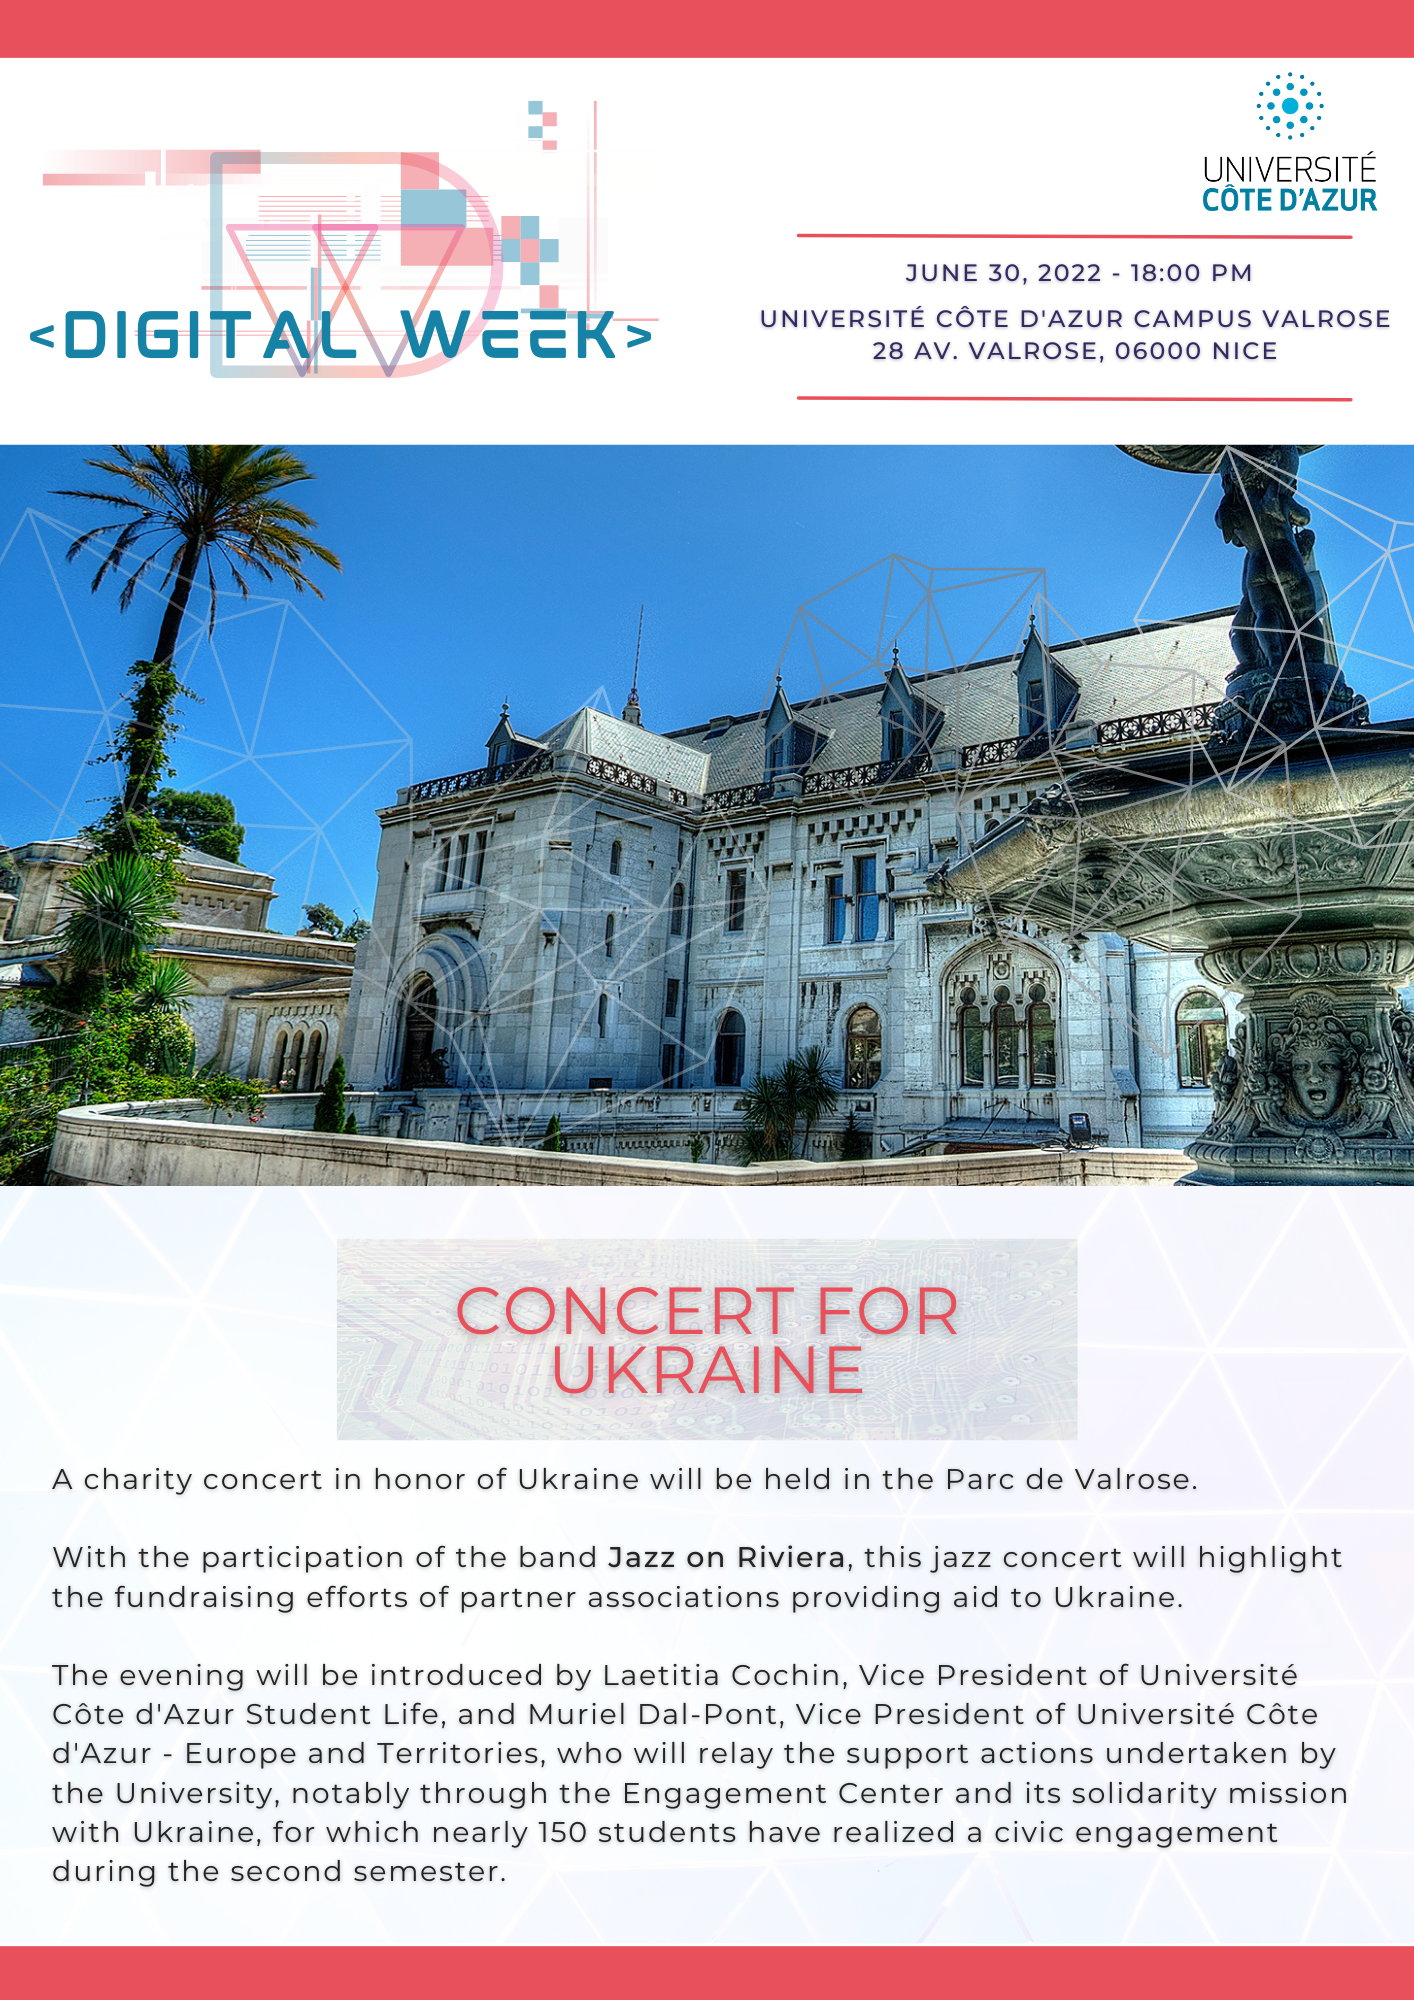 Digital week univ cote d'azur concert ukraine